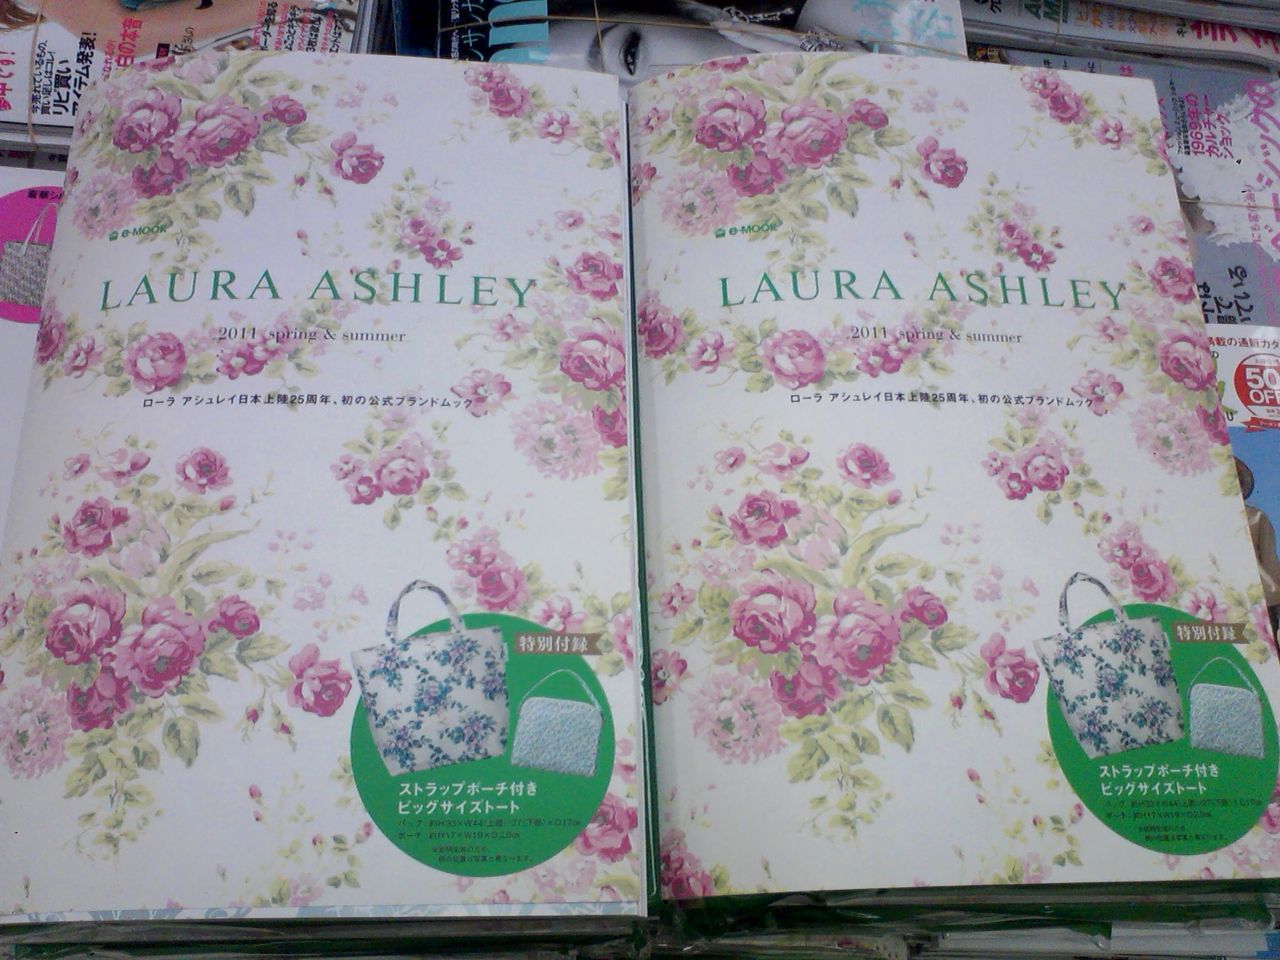 Laura Ashley ローラアシュレイ のムック本が入荷しました 成文堂早稲田駅前店のブログ